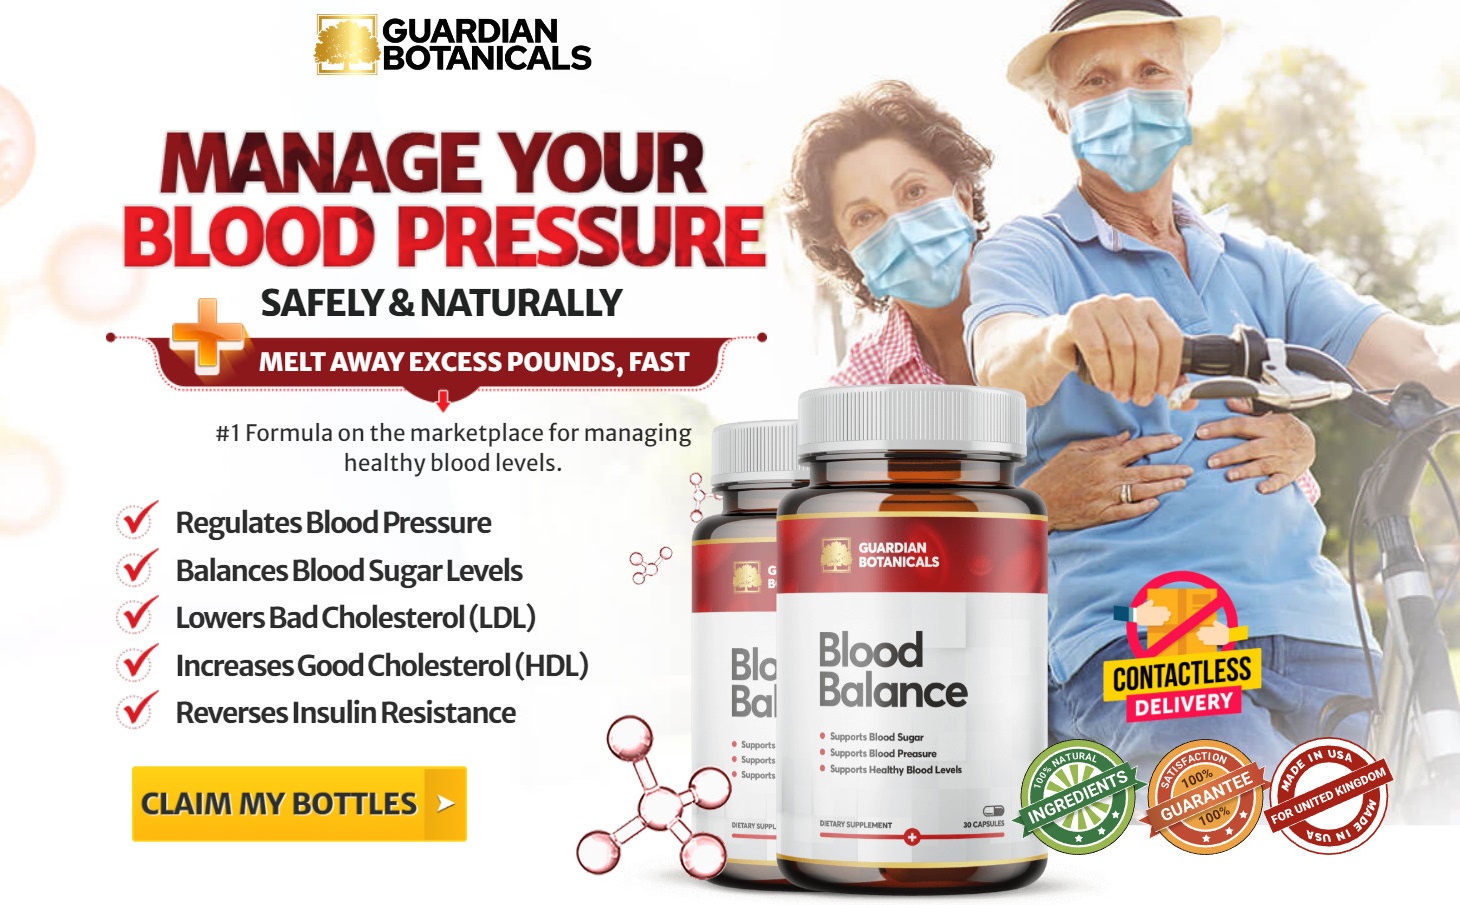 Guardian Botanicals Blood Balance 3